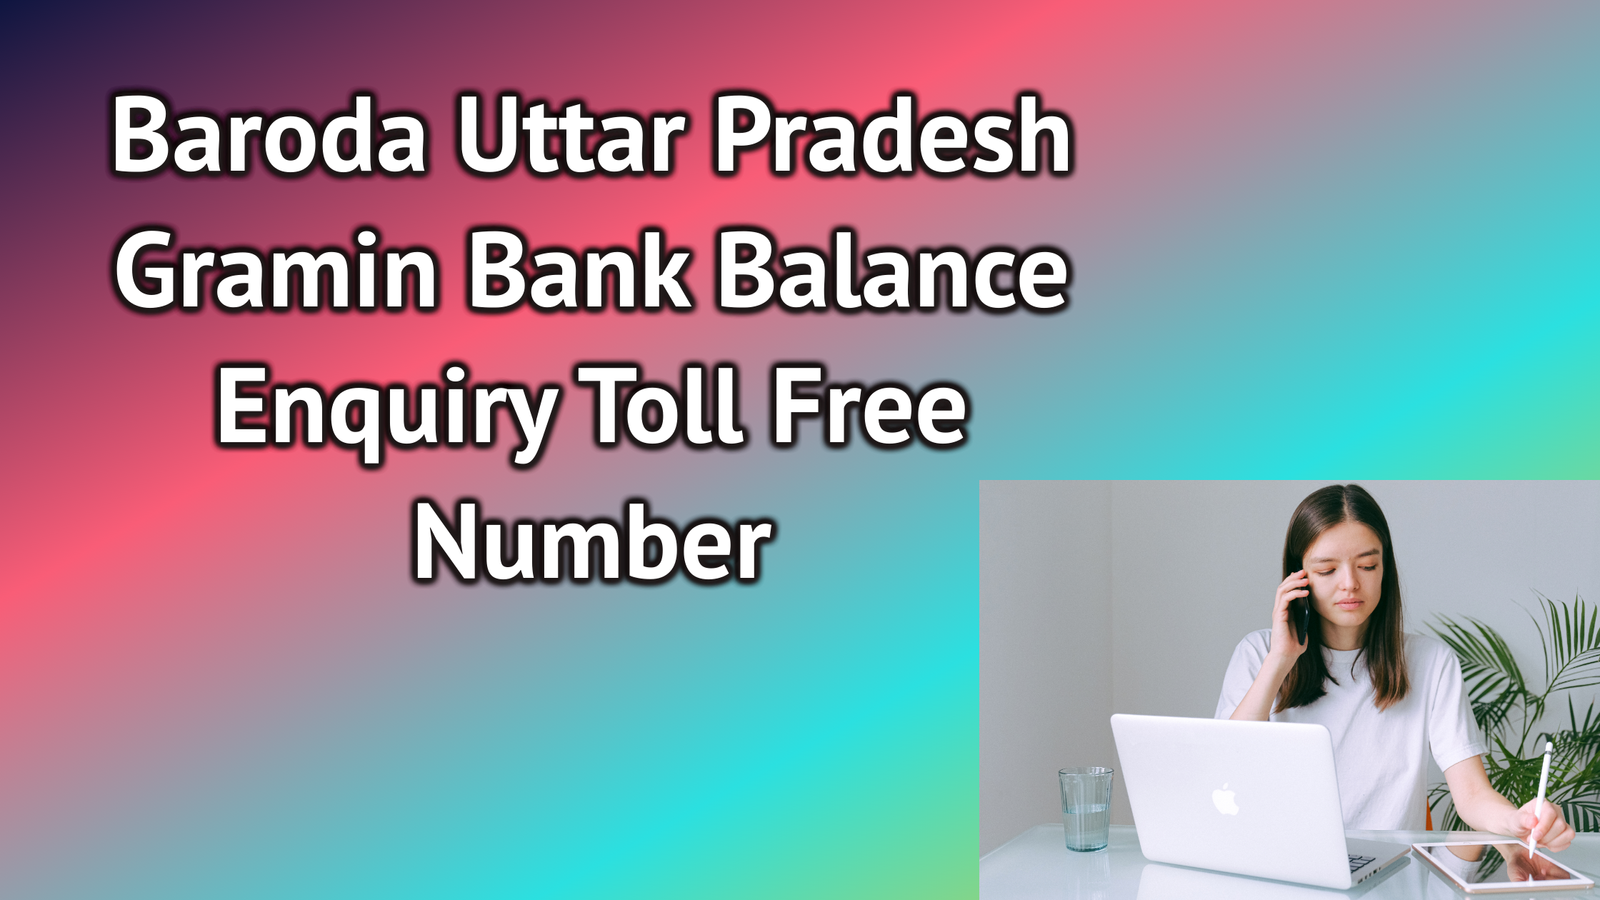 Baroda Uttar Pradesh Gramin Bank Balance Enquiry Toll Free